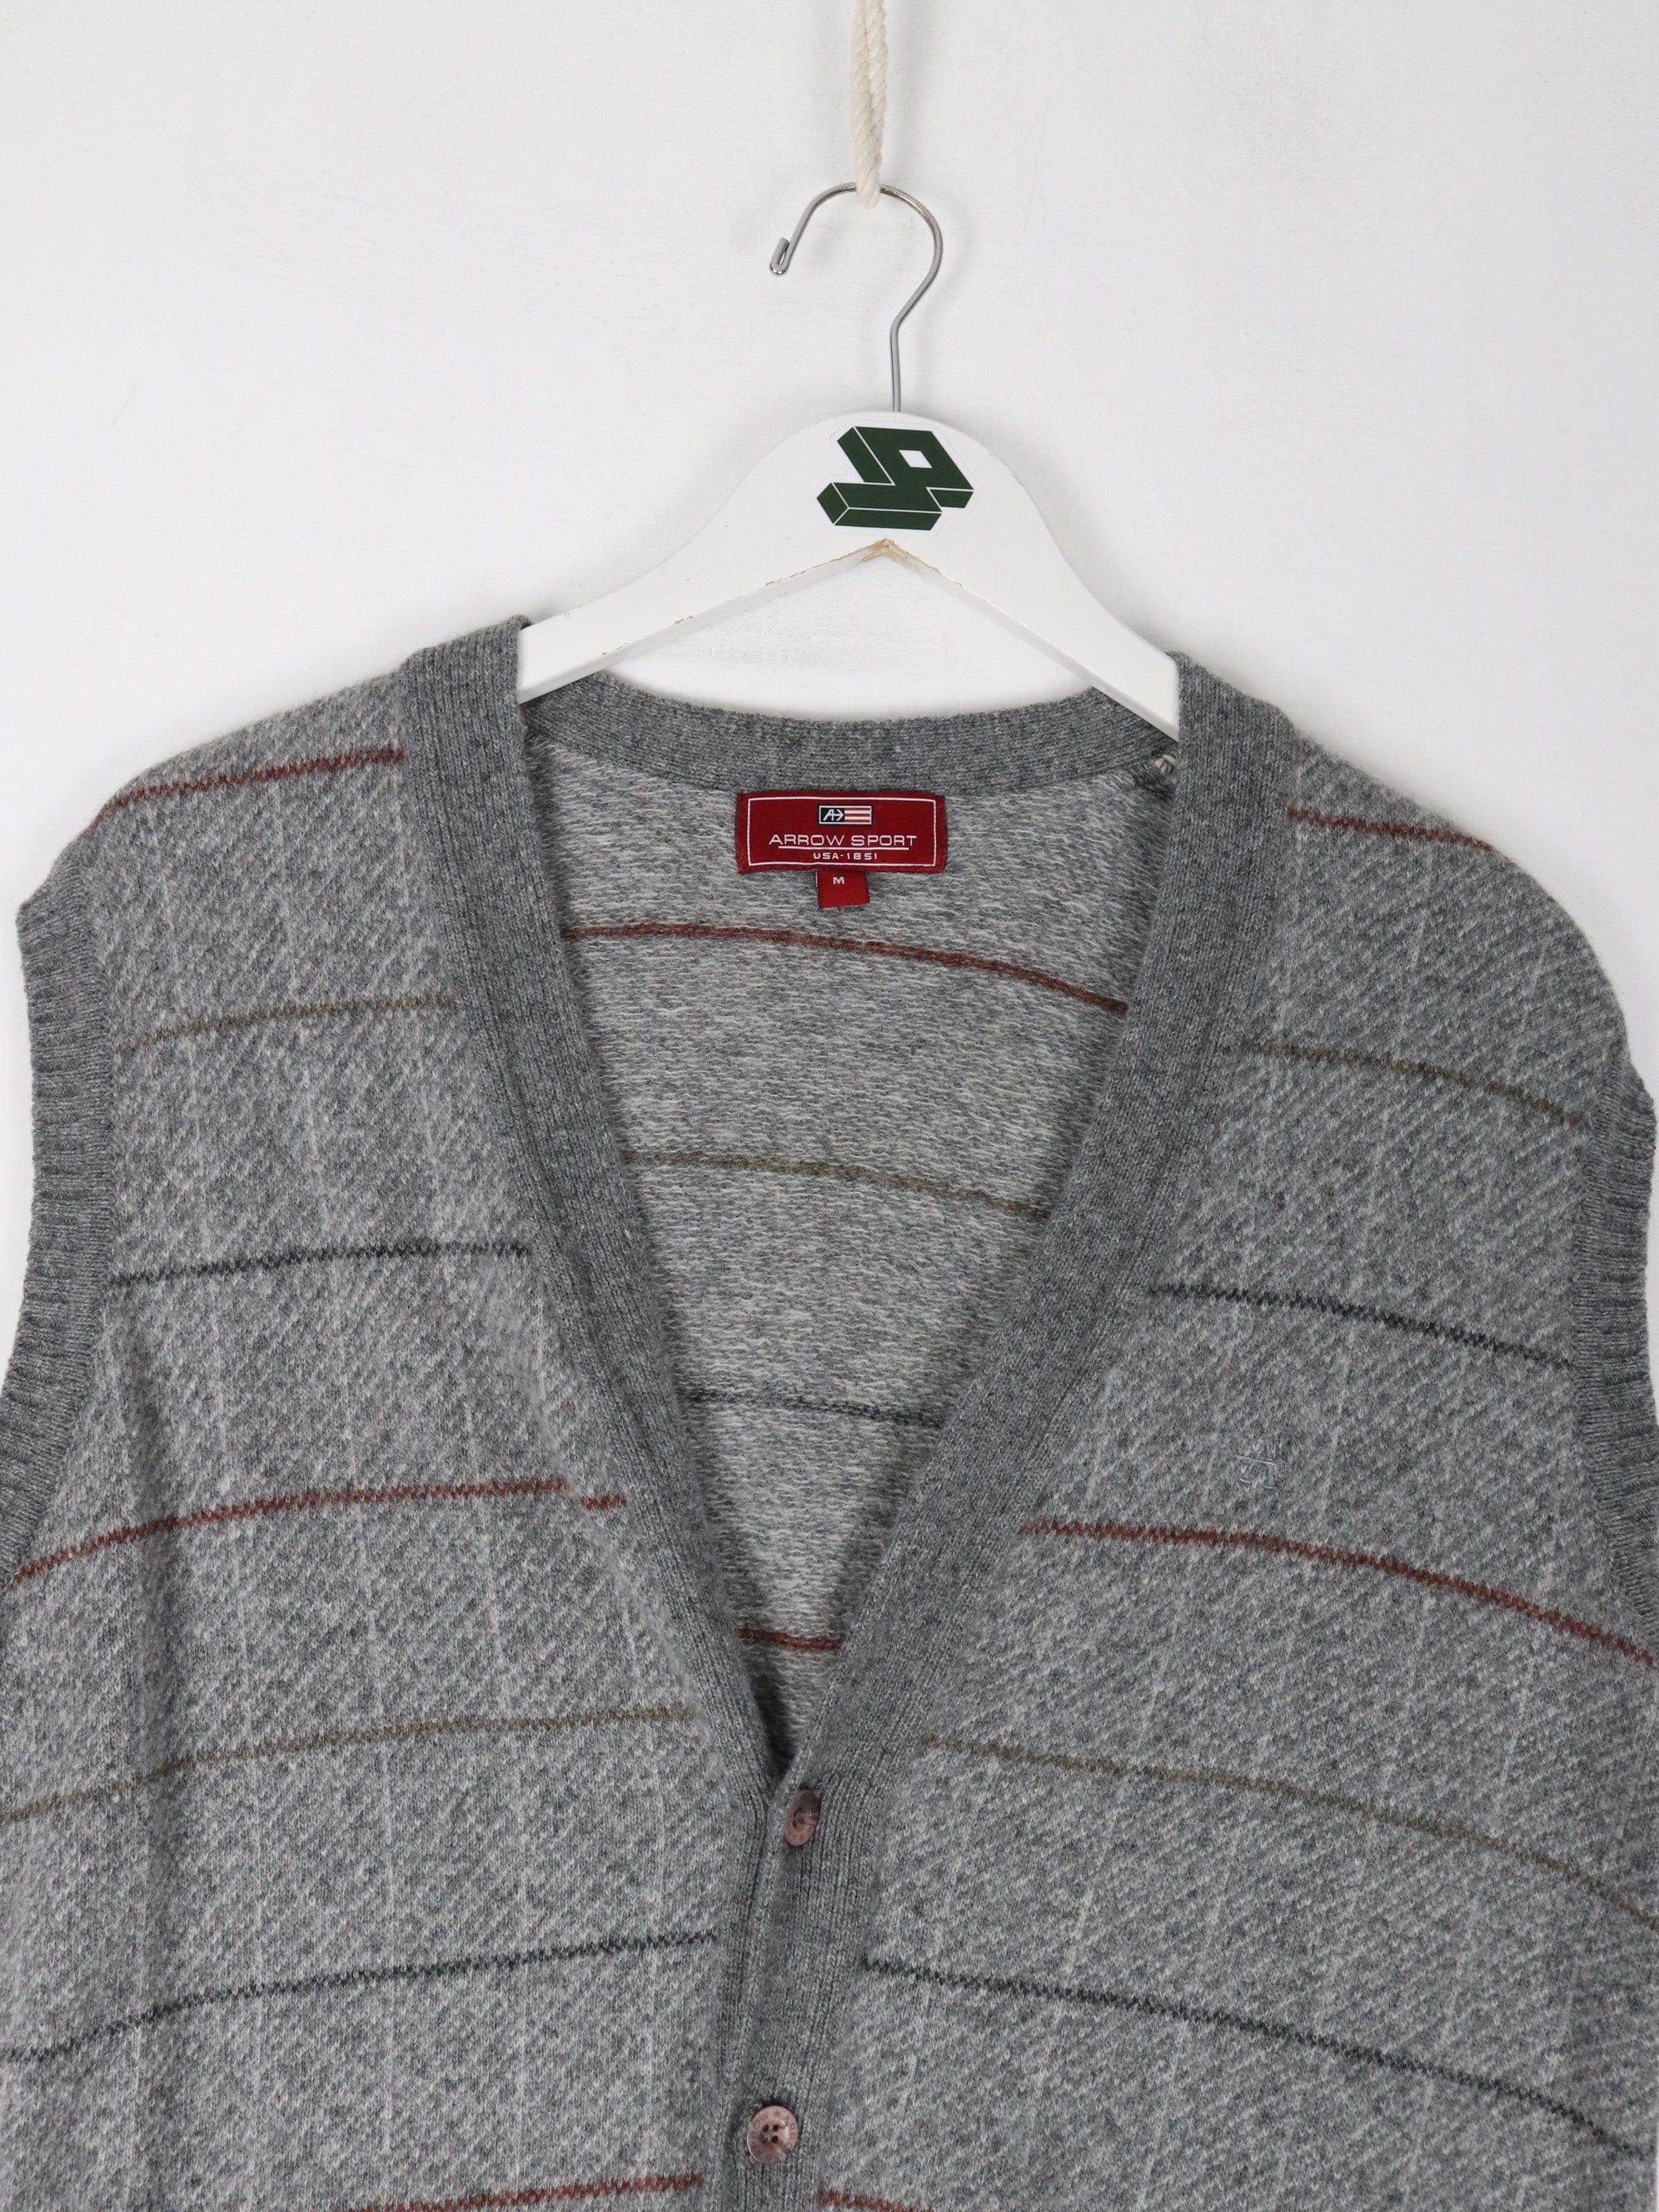 Grey Knit Cardigan Sweater